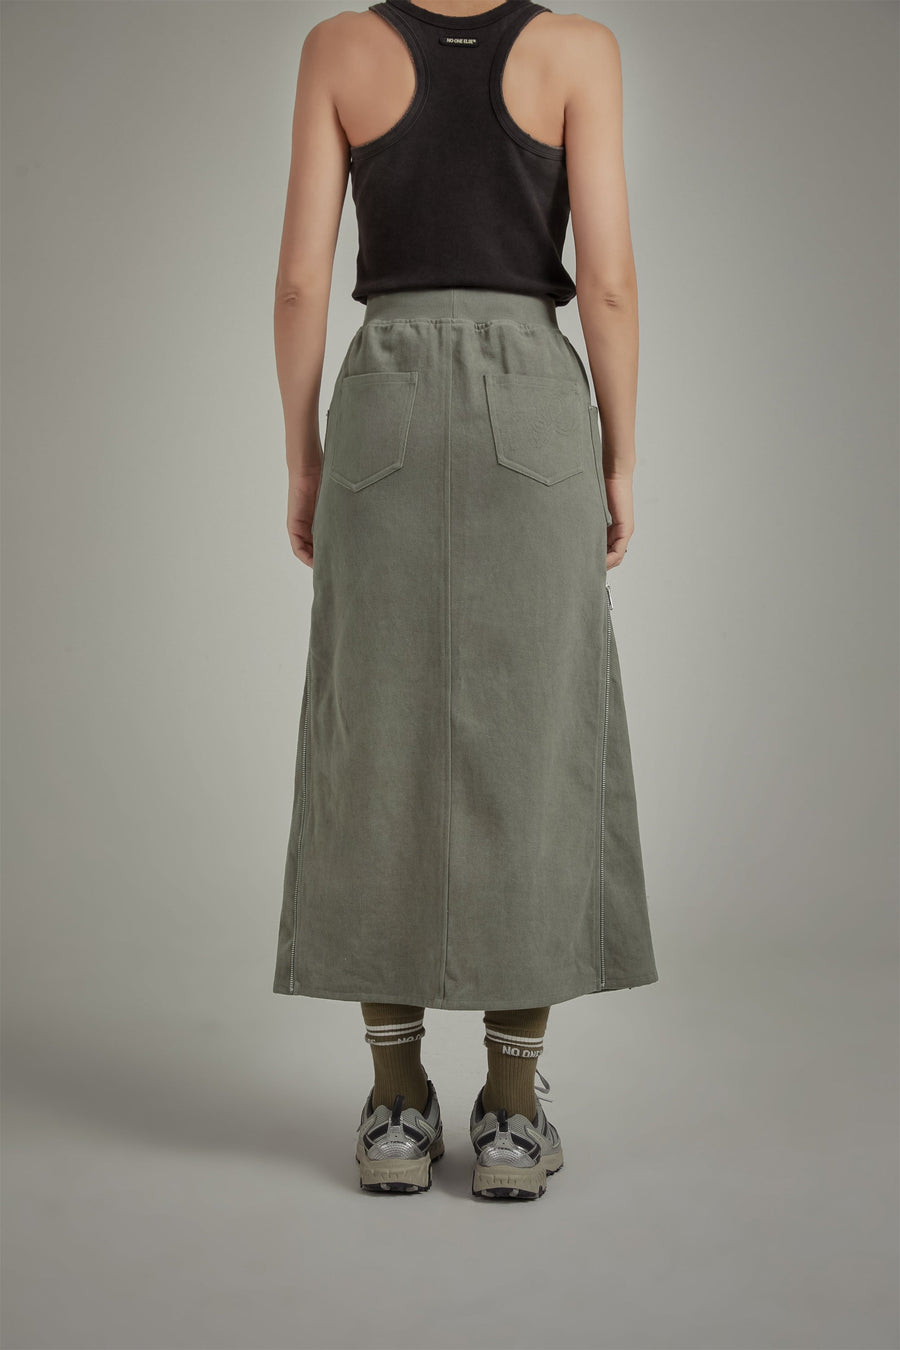 CHUU Pocket Casual Long String Skirt